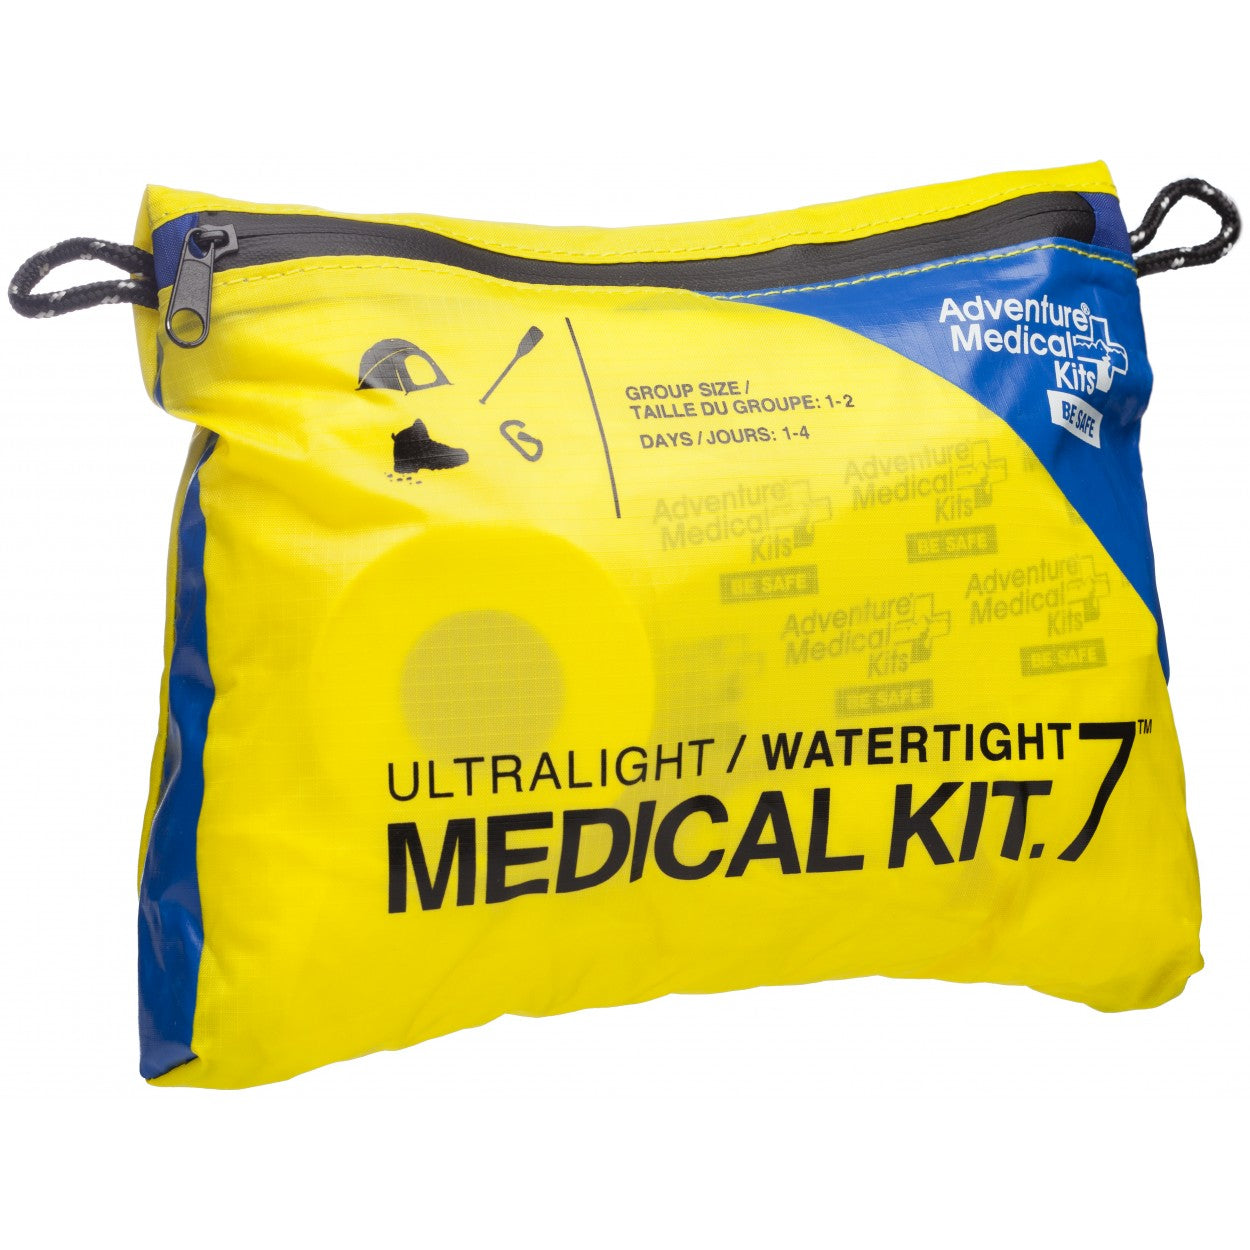 Adventure Medical Kit - Ultralight Medical Kit . First Aid Kit